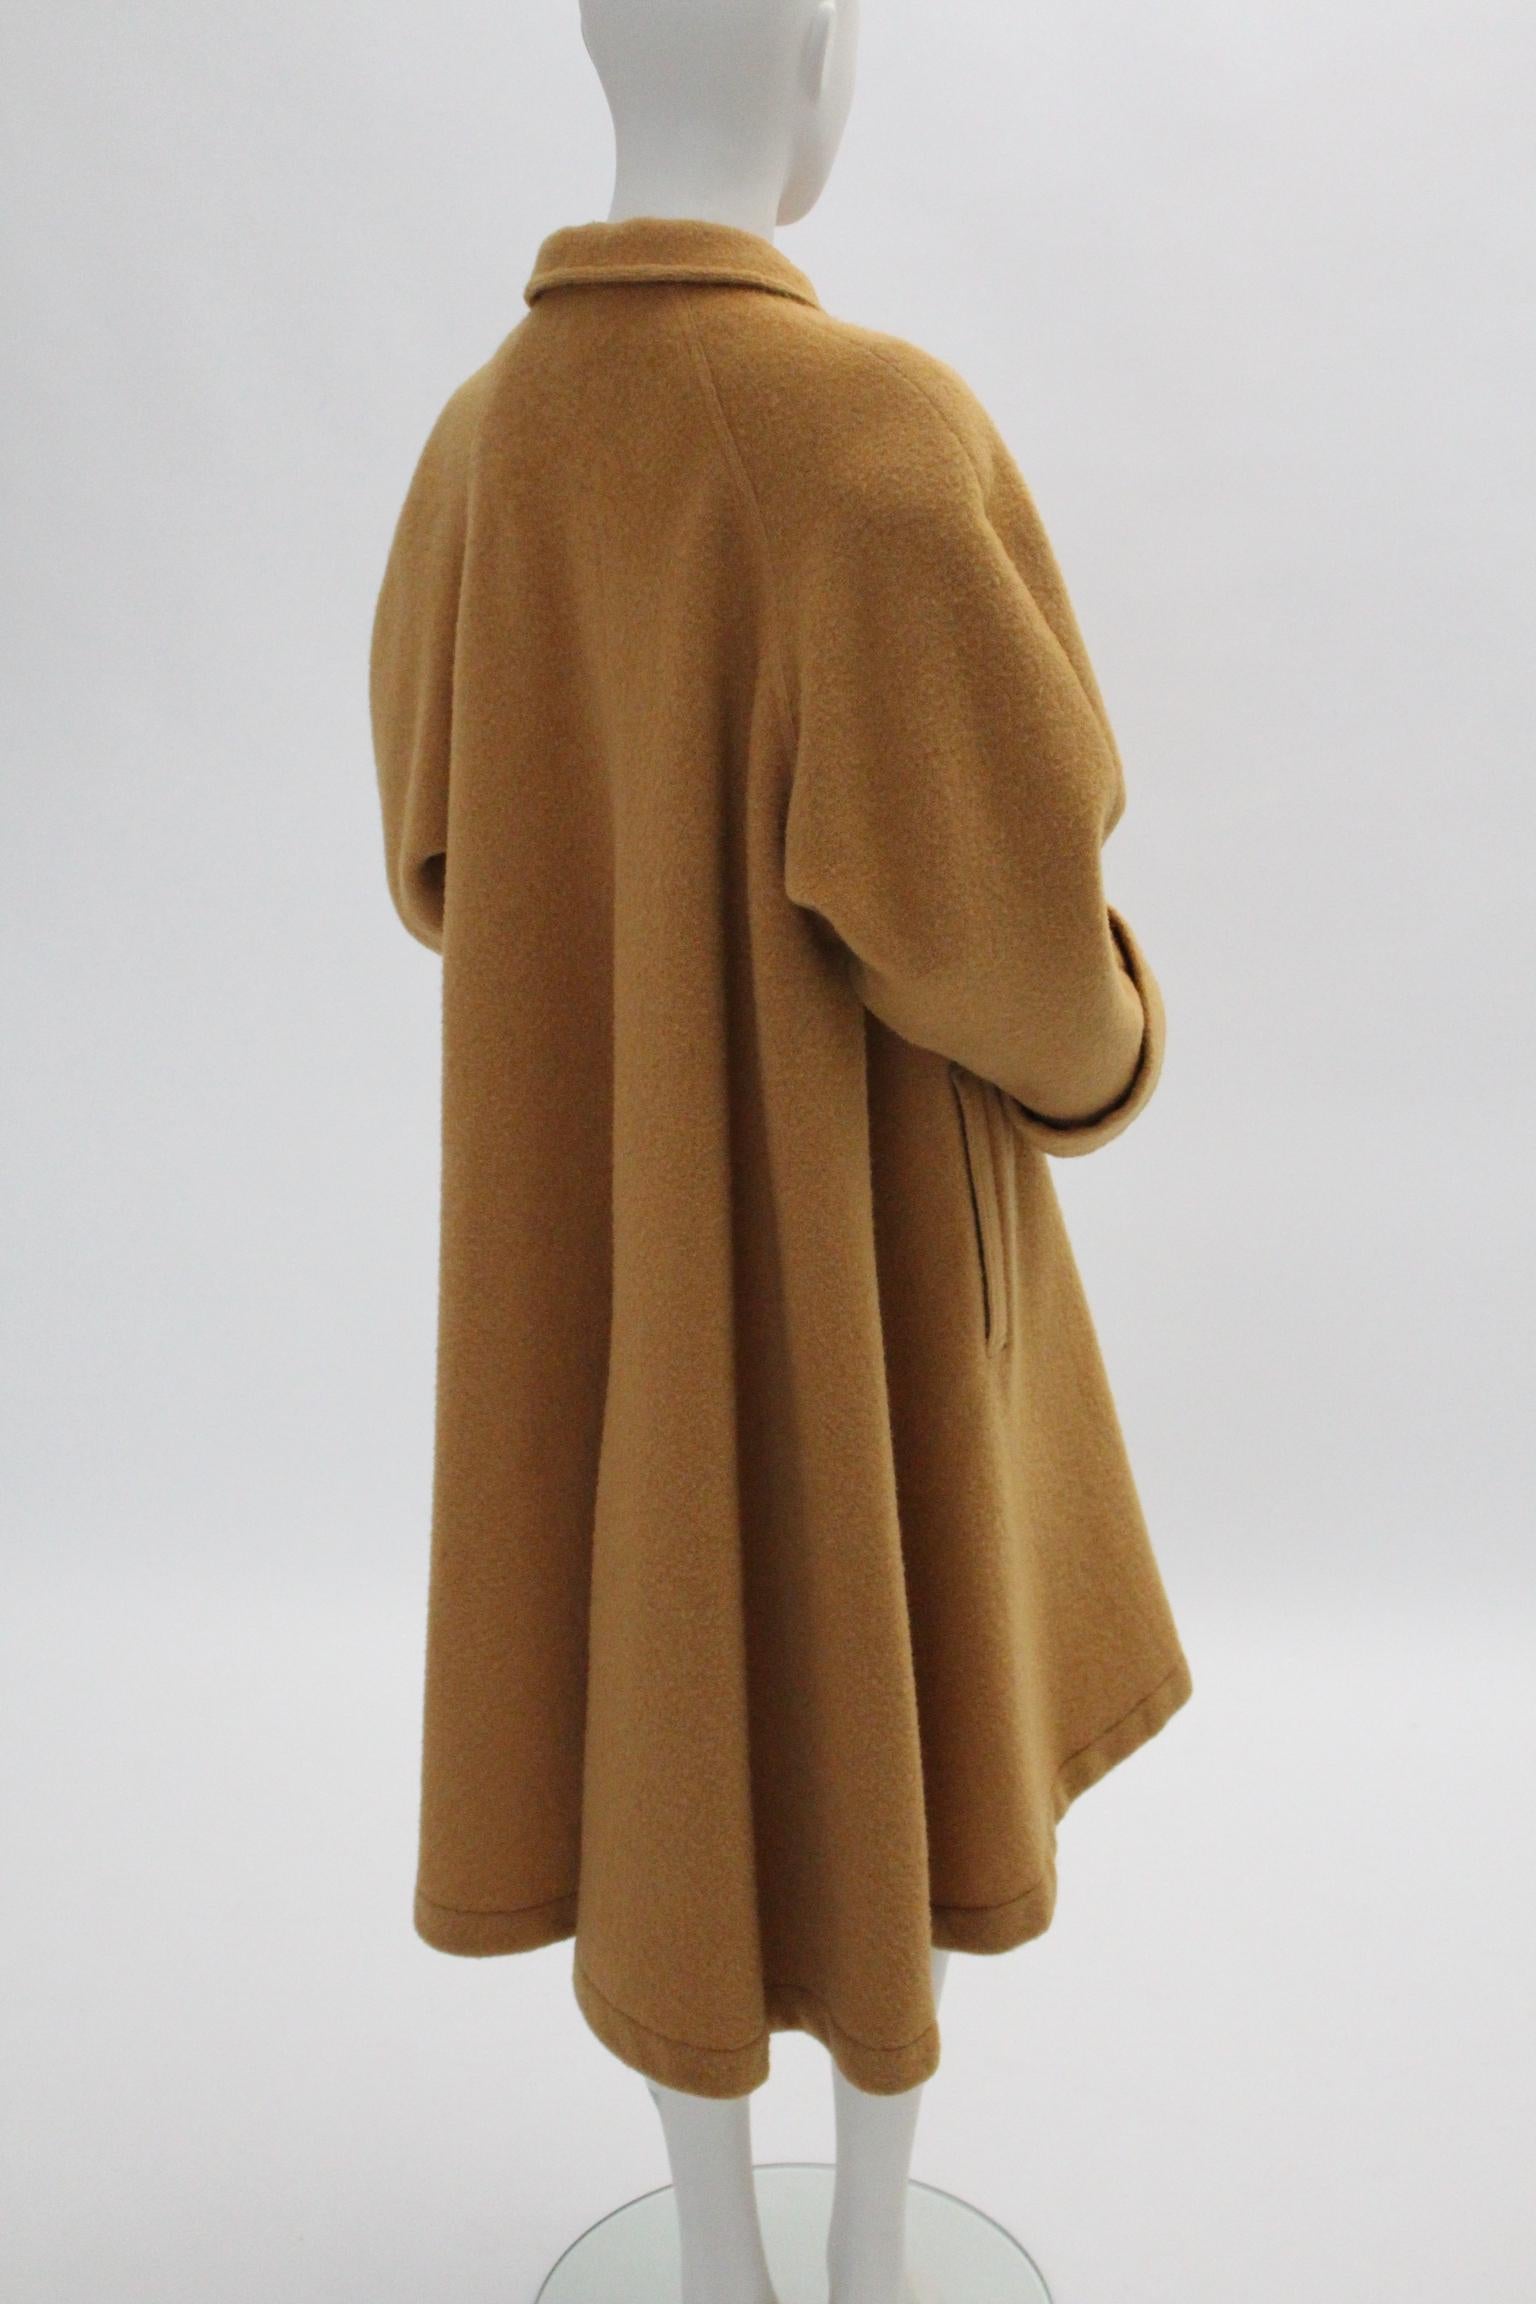 Guy Laroche Diffusion Paris Vintage Wool Coat 1970s For Sale 3